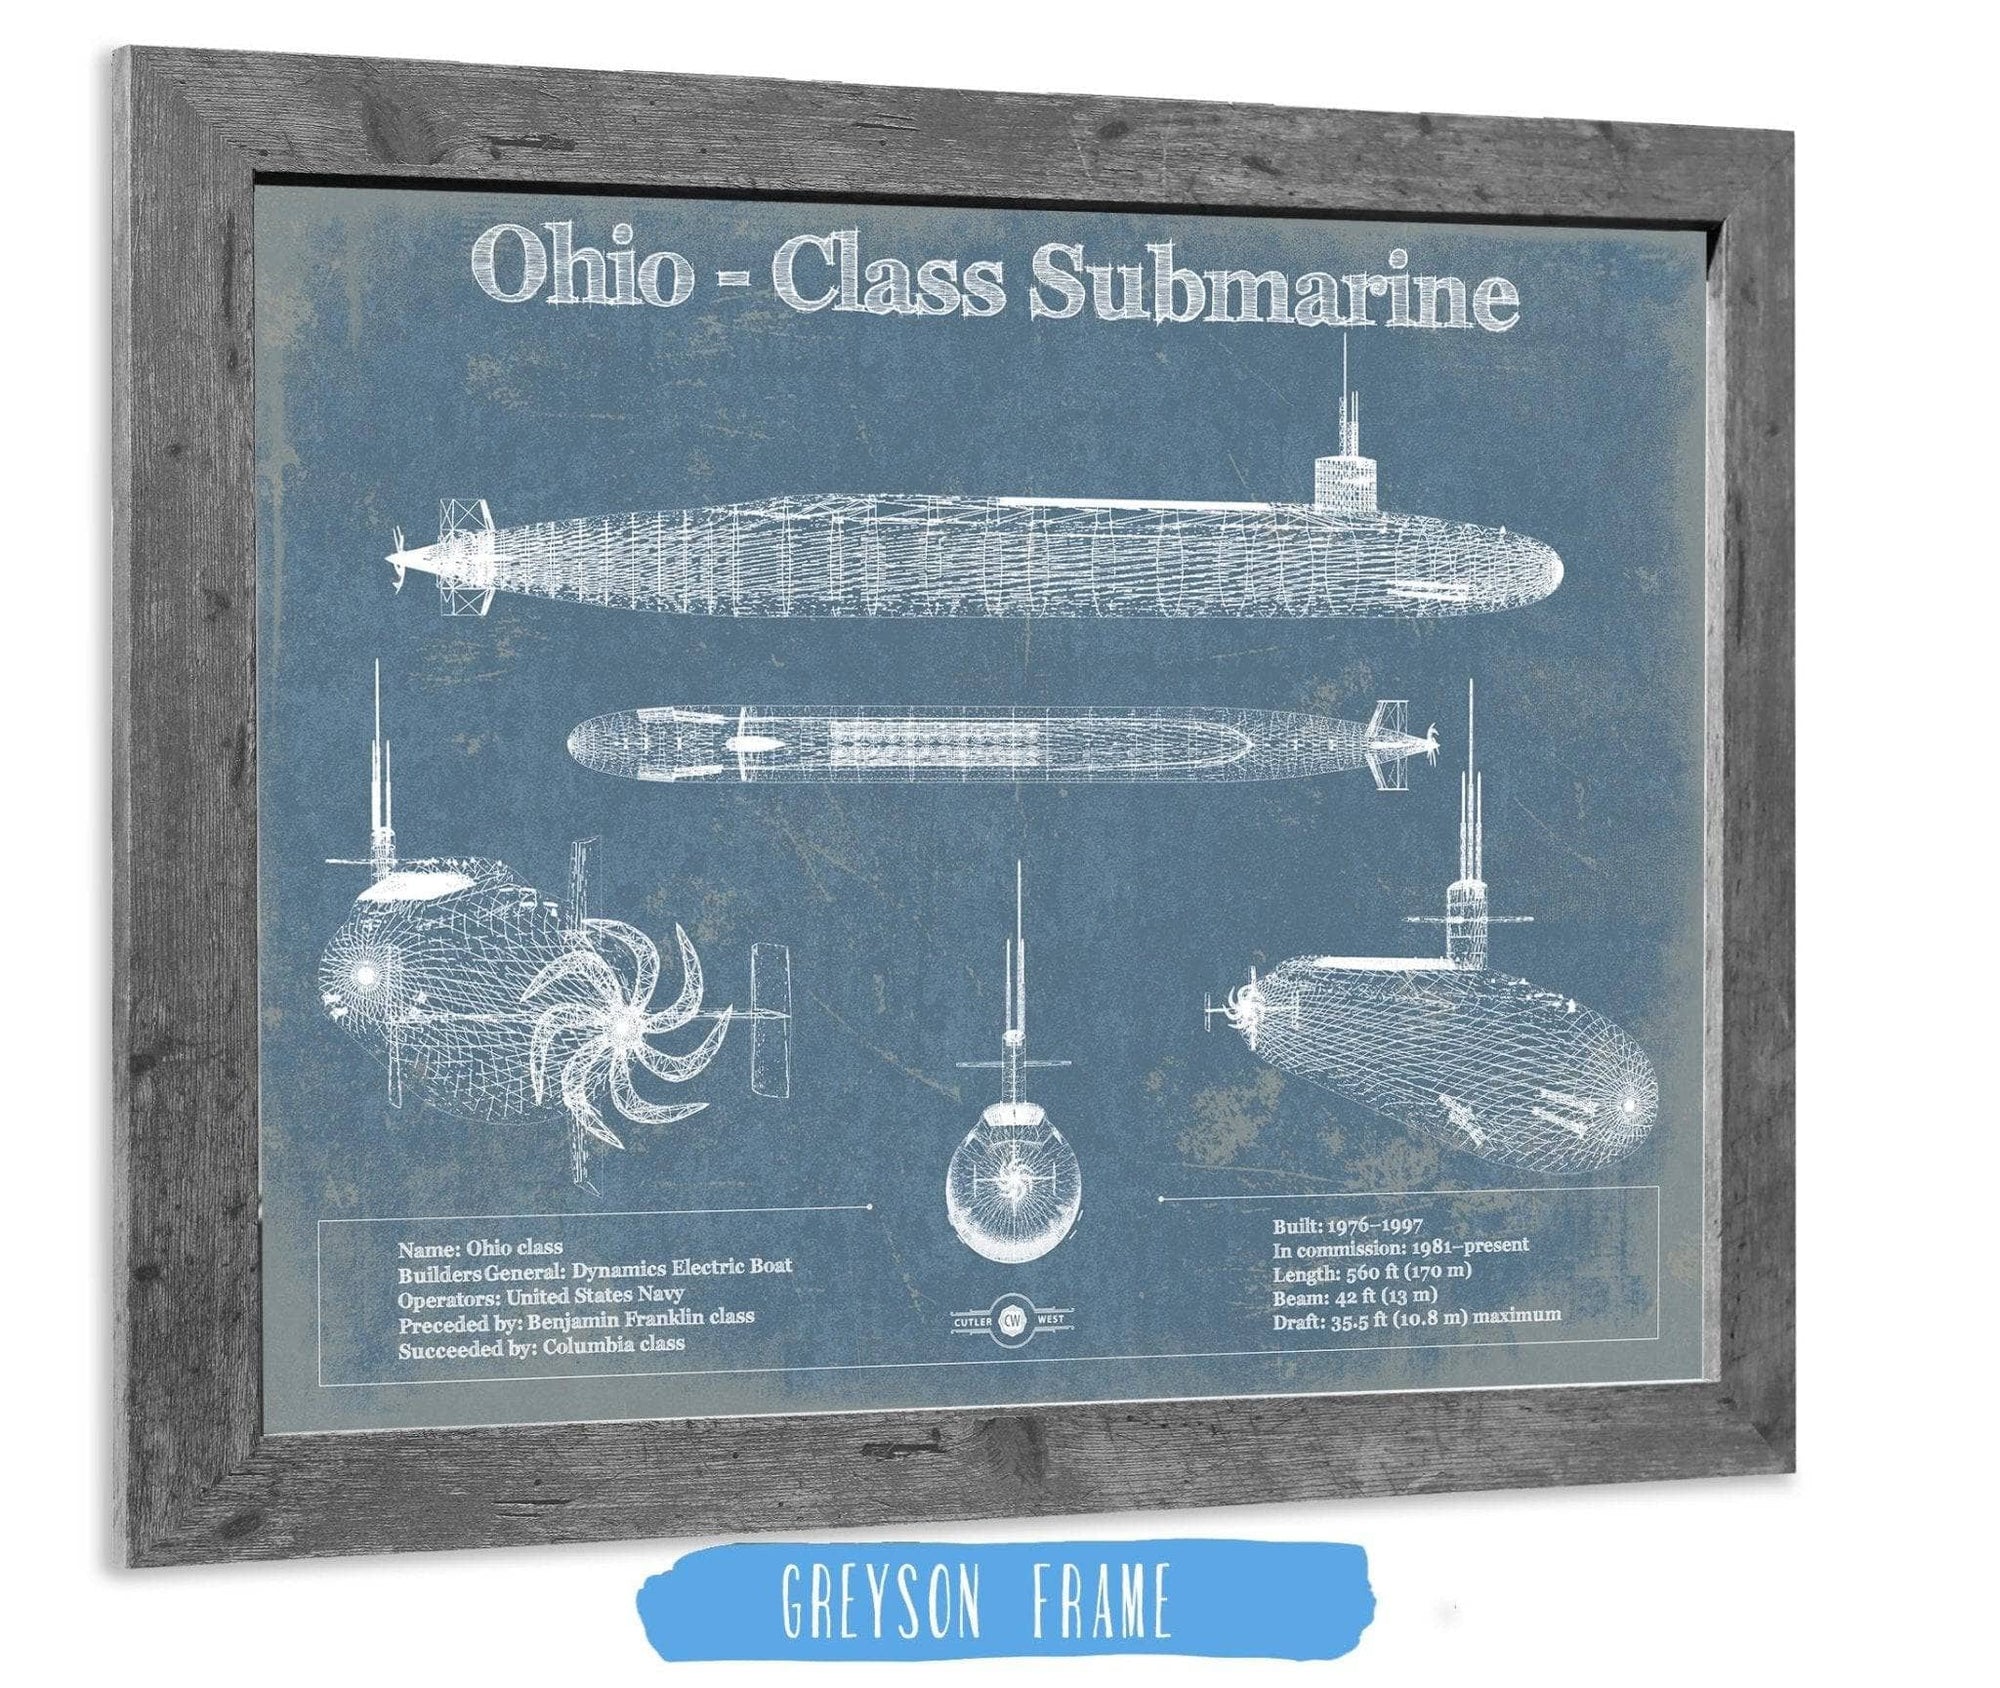 Cutler West Naval Military 14" x 11" / Greyson Frame Ohio SSBN Nuclear Ballistic Missile Submarine Blueprint Patent Original Art - Customizable 933350069_20645